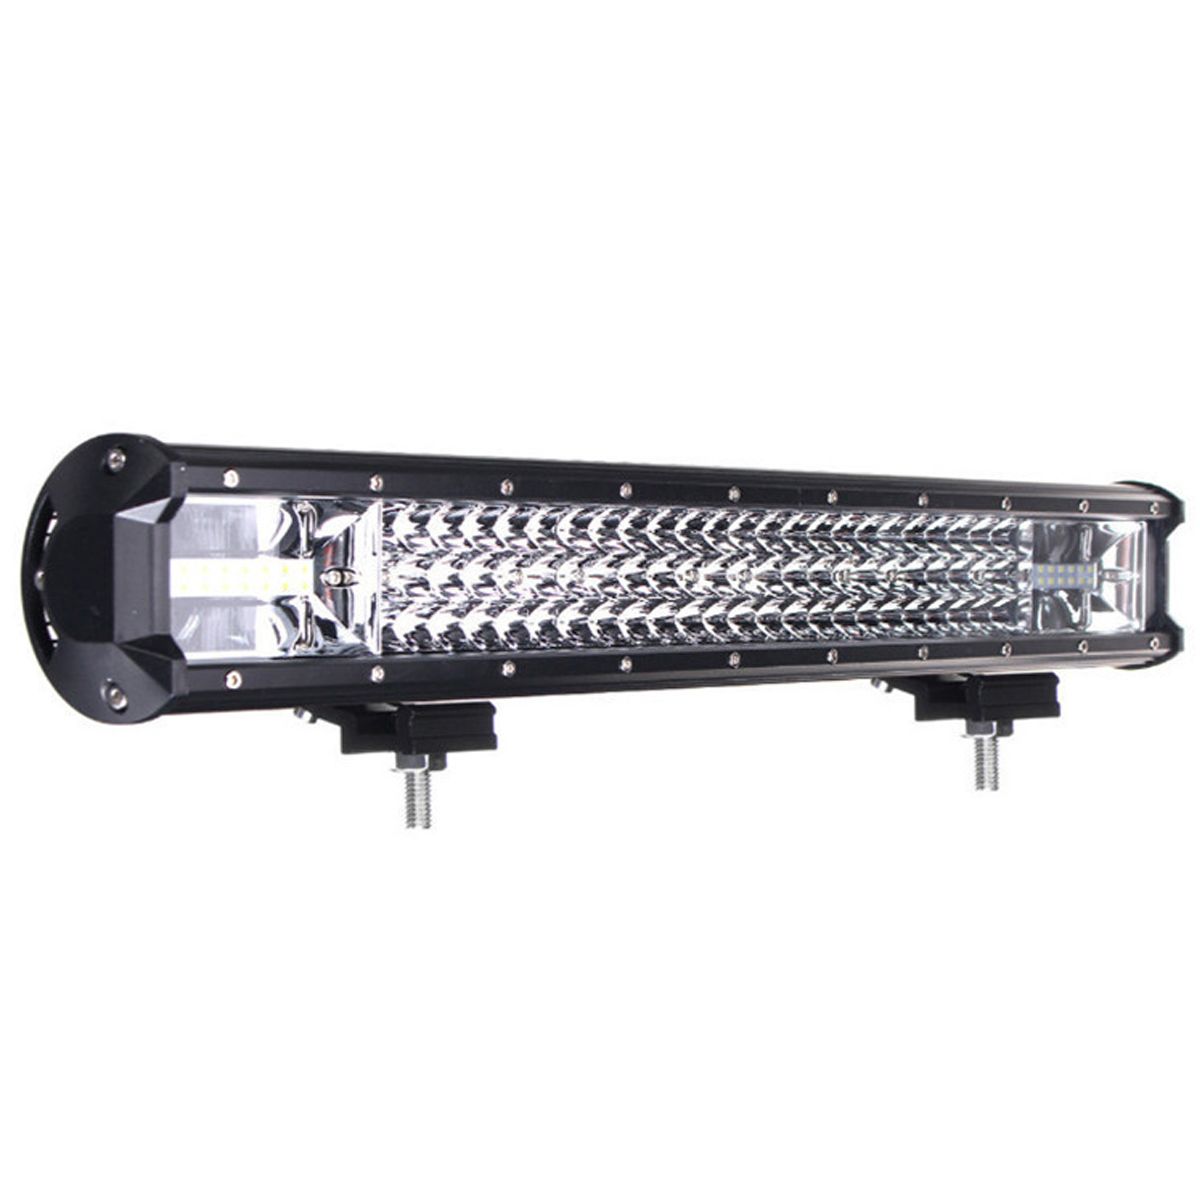 Car-LED-Work-Light-Bar-360-deg-Stand-Waterproof-IP68-Universal-Voltage-Off-road-SUV-Truck-Lamp-1658424